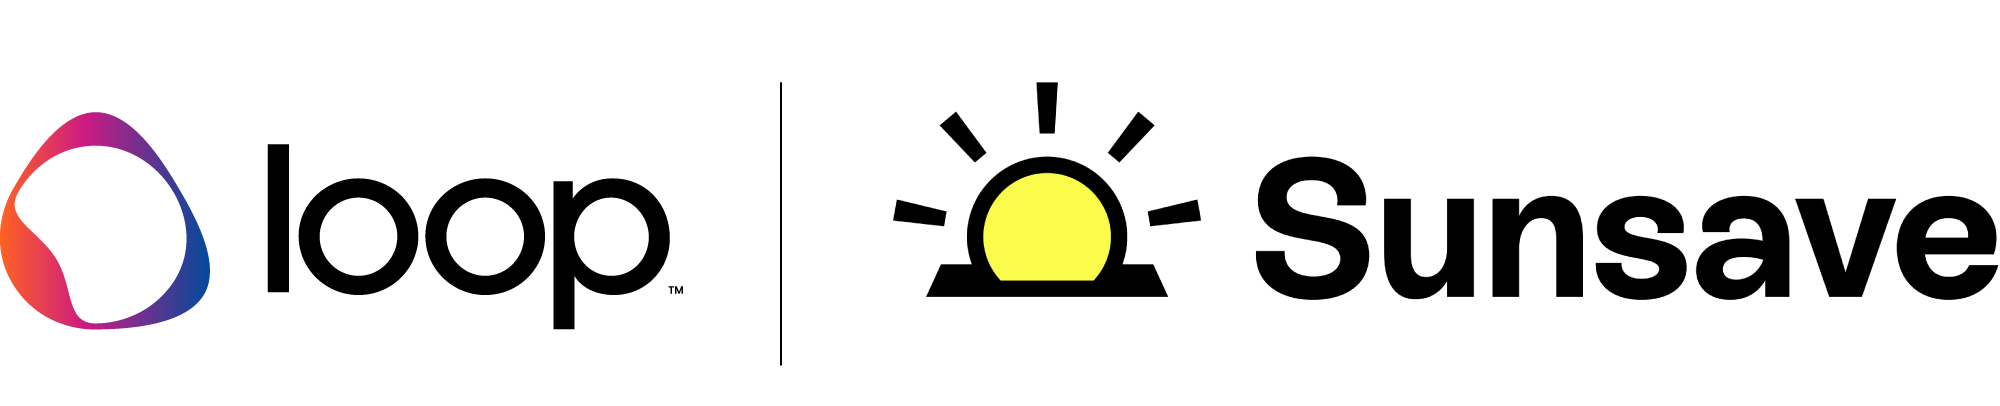 loop and sunsave logo